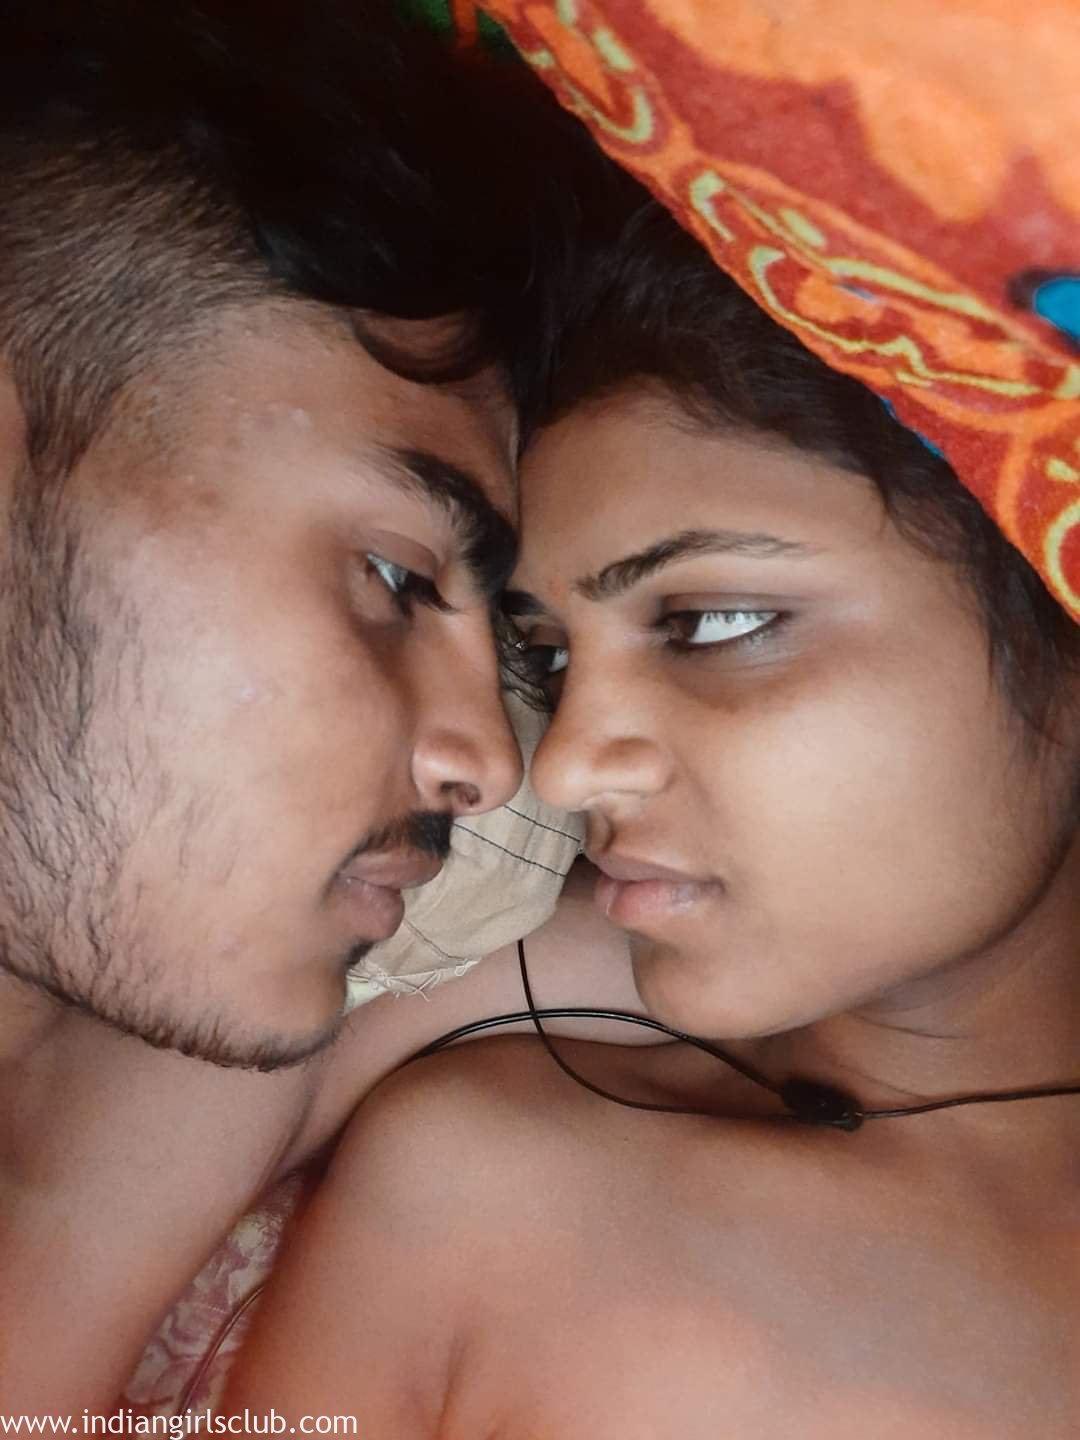 Tamil College Couple Romantic Bedroom Sex In Desi Style pic